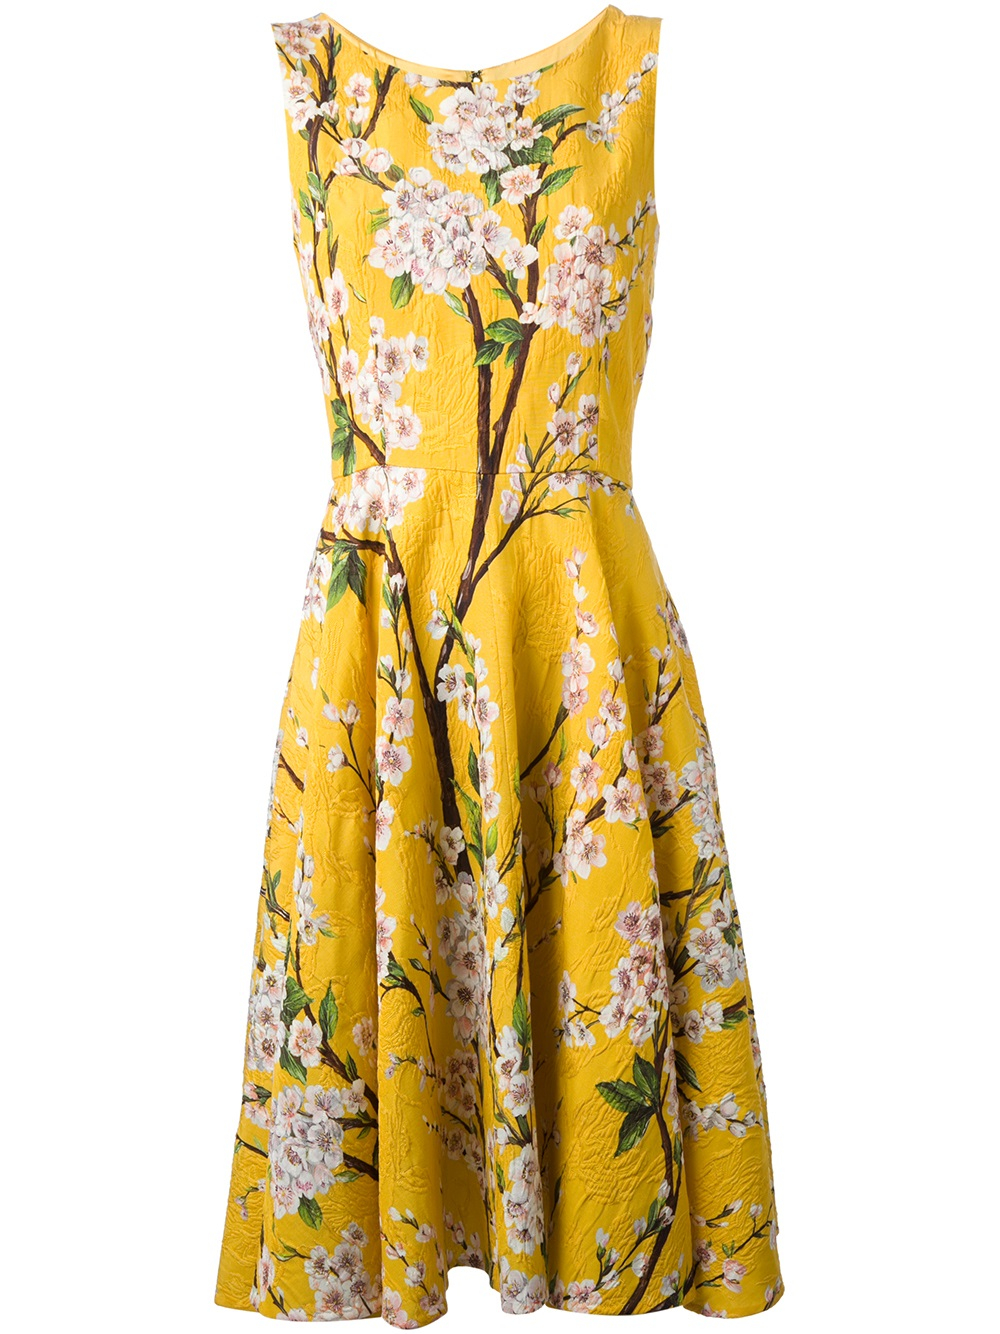 Lyst - Dolce & gabbana Floral Print Brocade Dress in Yellow